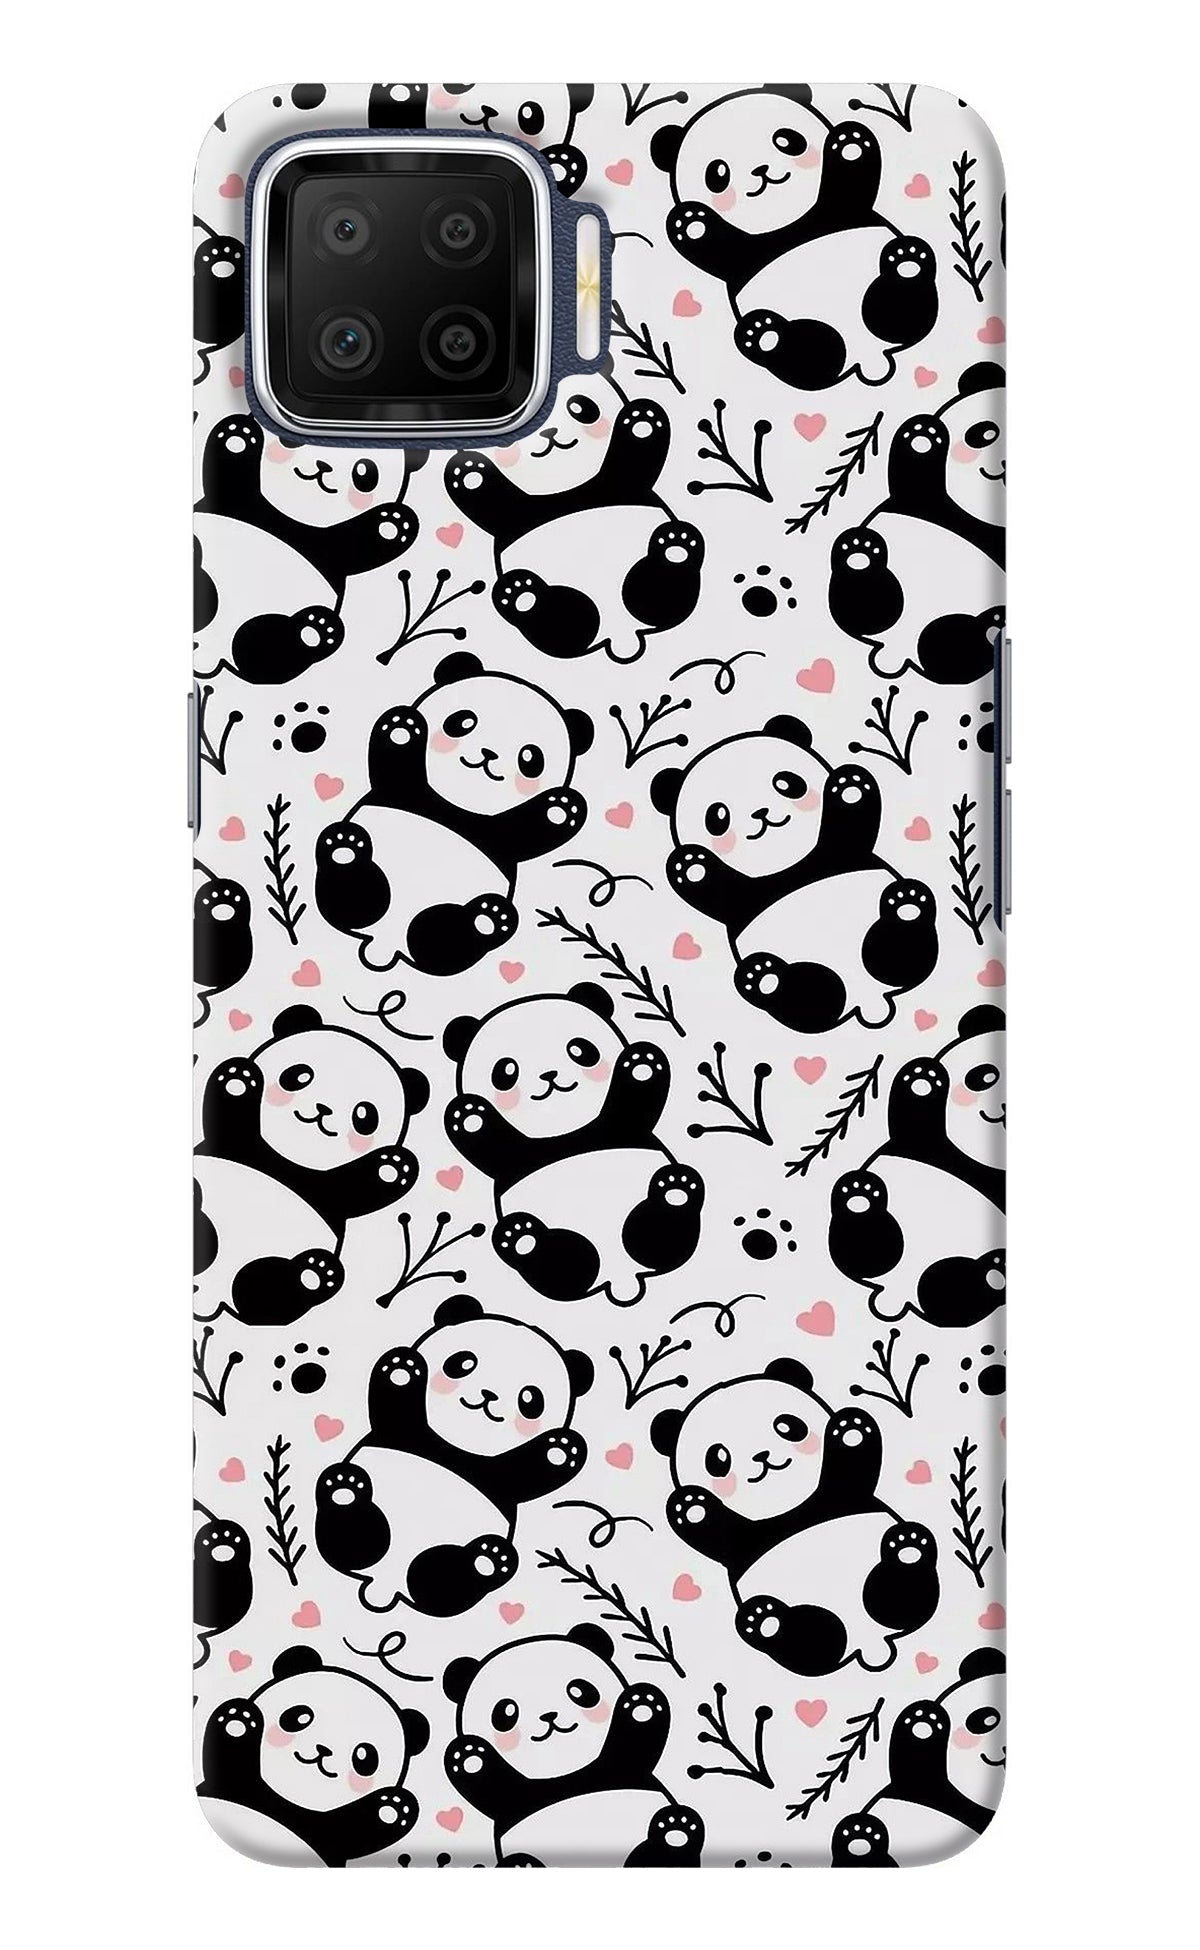 Cute Panda Oppo F17 Back Cover